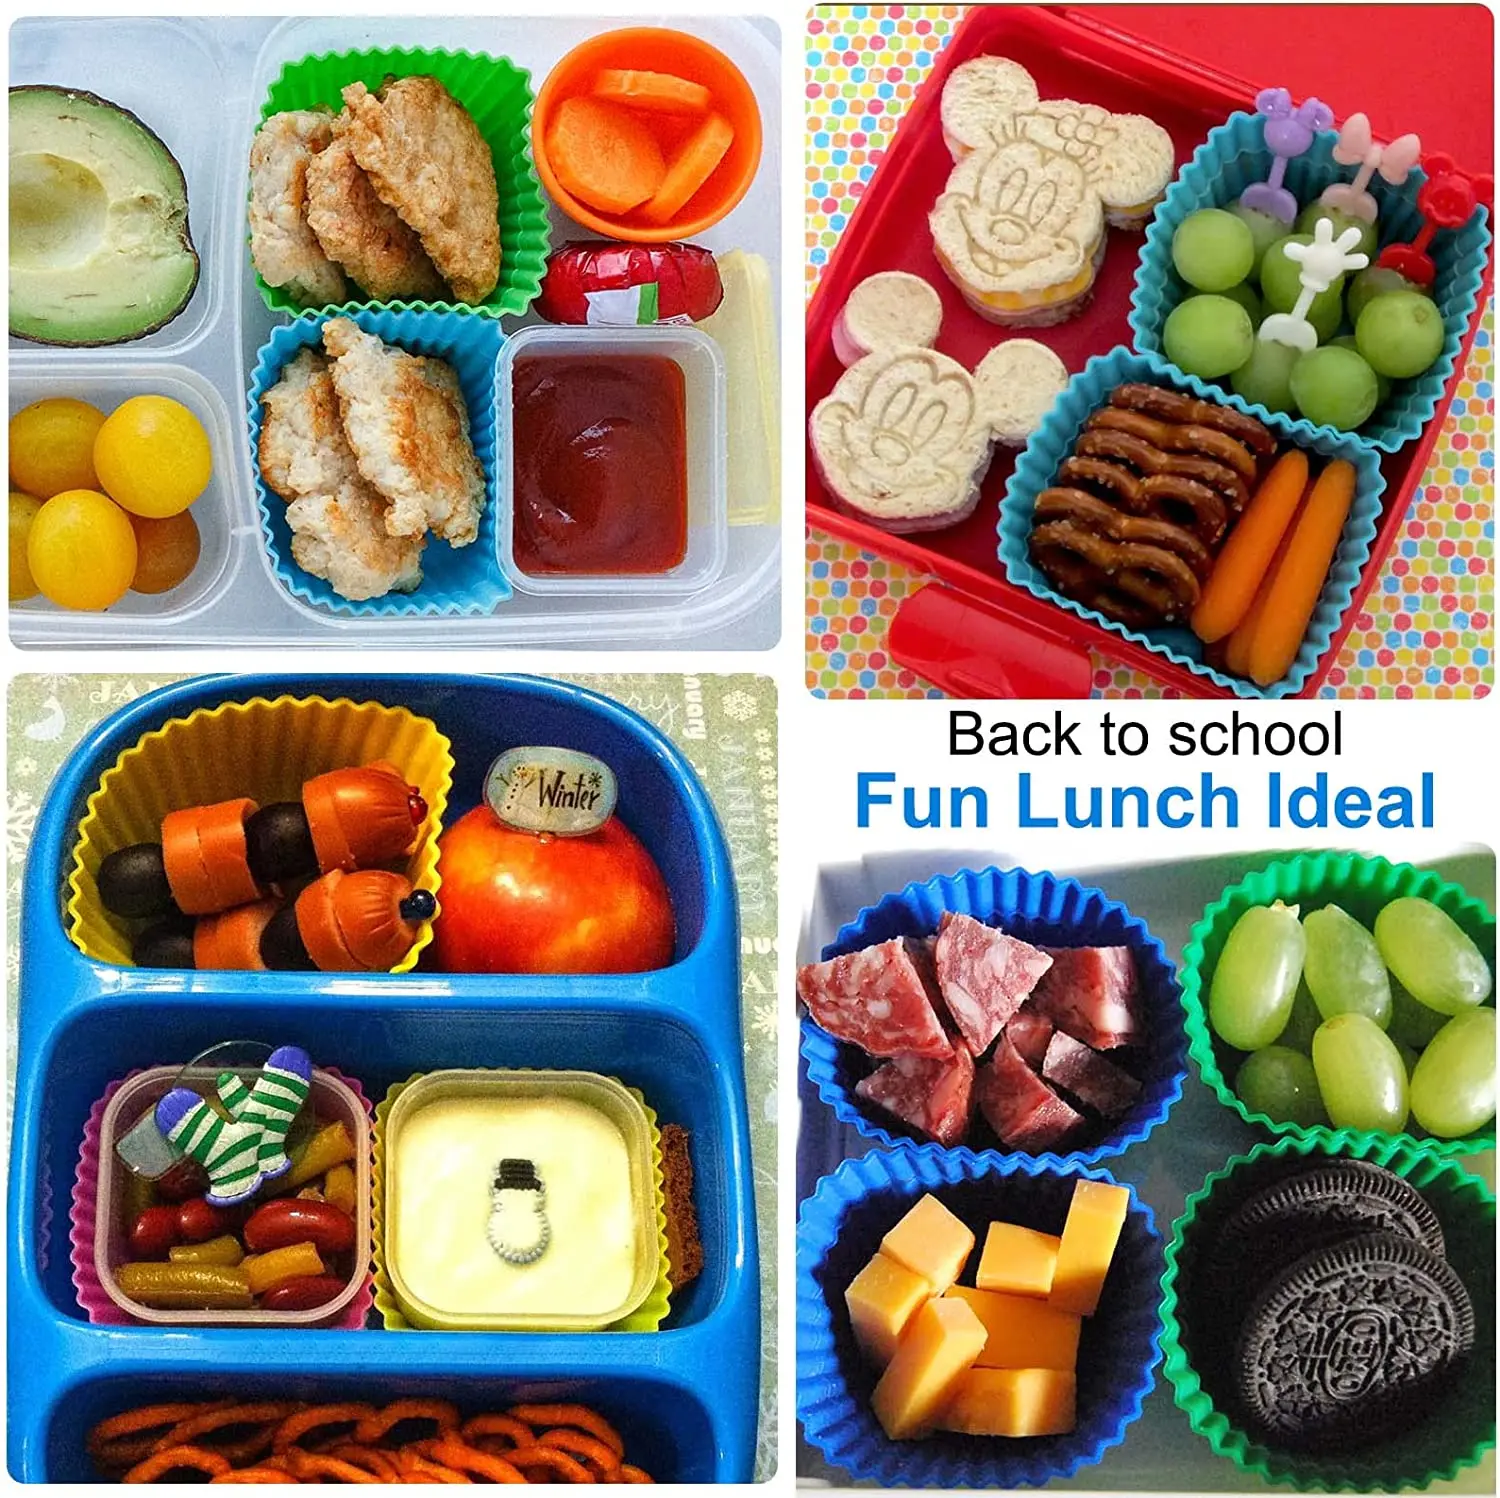 https://ae01.alicdn.com/kf/S6cabe2dcb97b4eecbb4858d026bf1799p/Cute-Mini-Animal-Cartoon-Food-Picks-Children-Snack-Cake-Dessert-Food-Fruit-Forks-Silicone-Lunch-Box.jpg